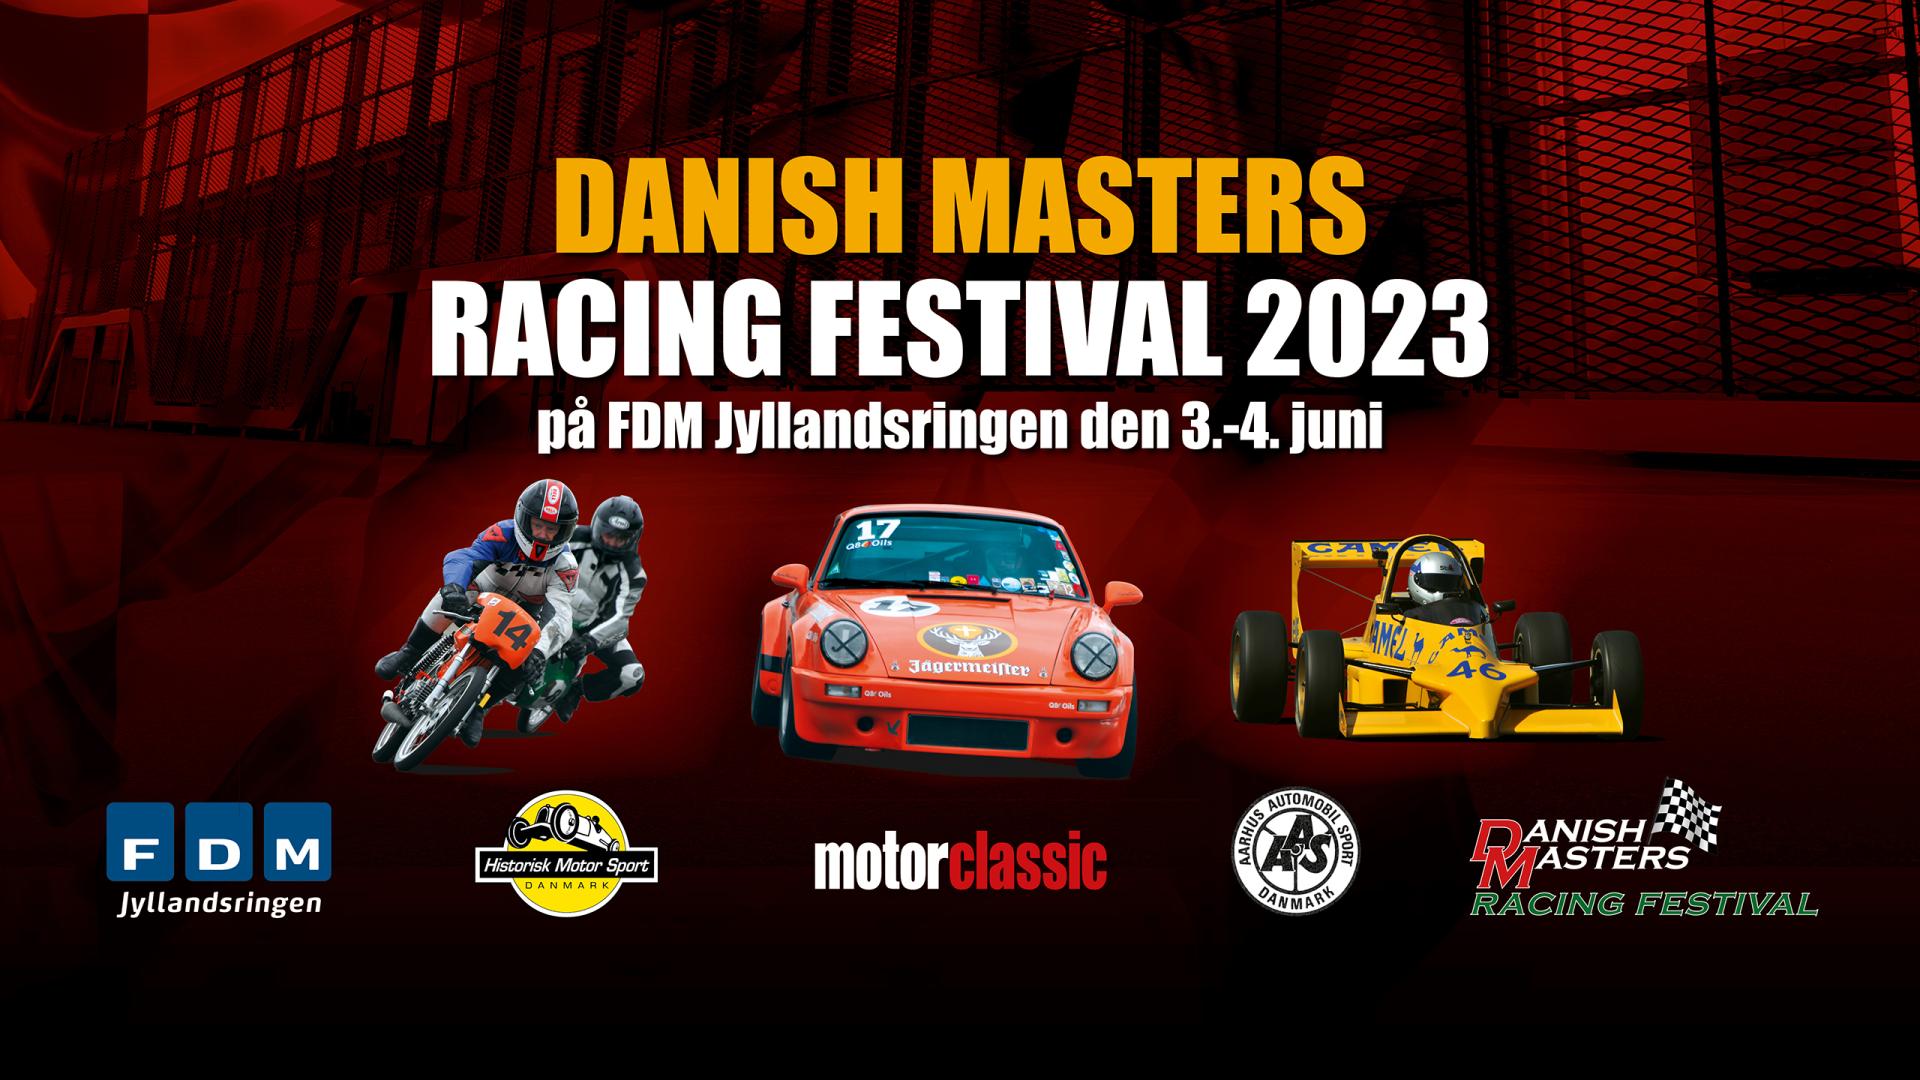 Danish Masters Racing Festival 2023 